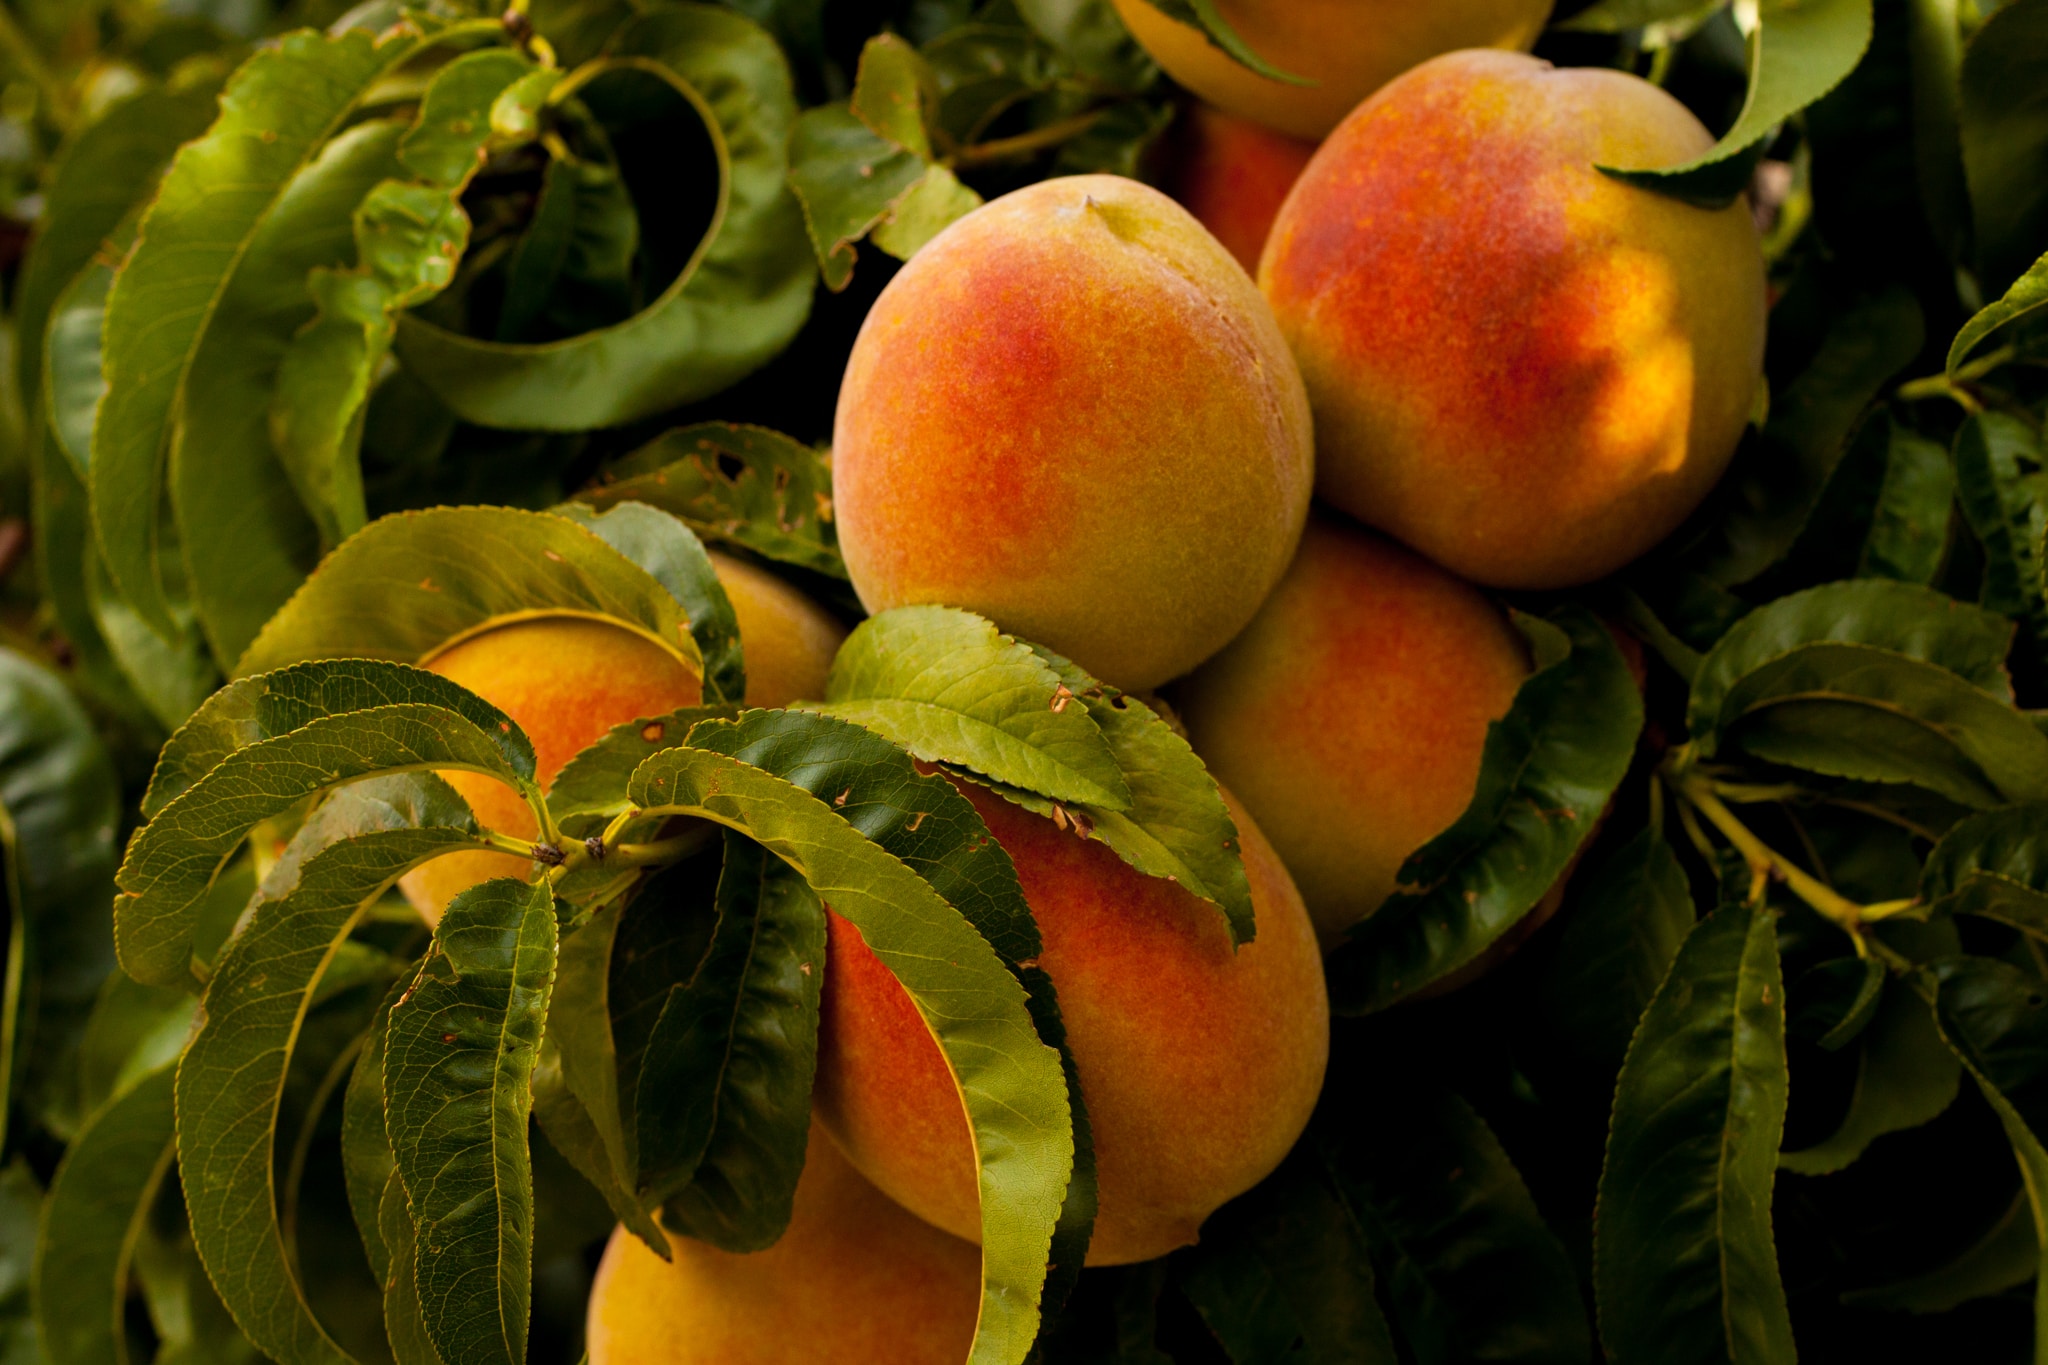 Peaches , The addu / aaru Fruit Cultivation in india